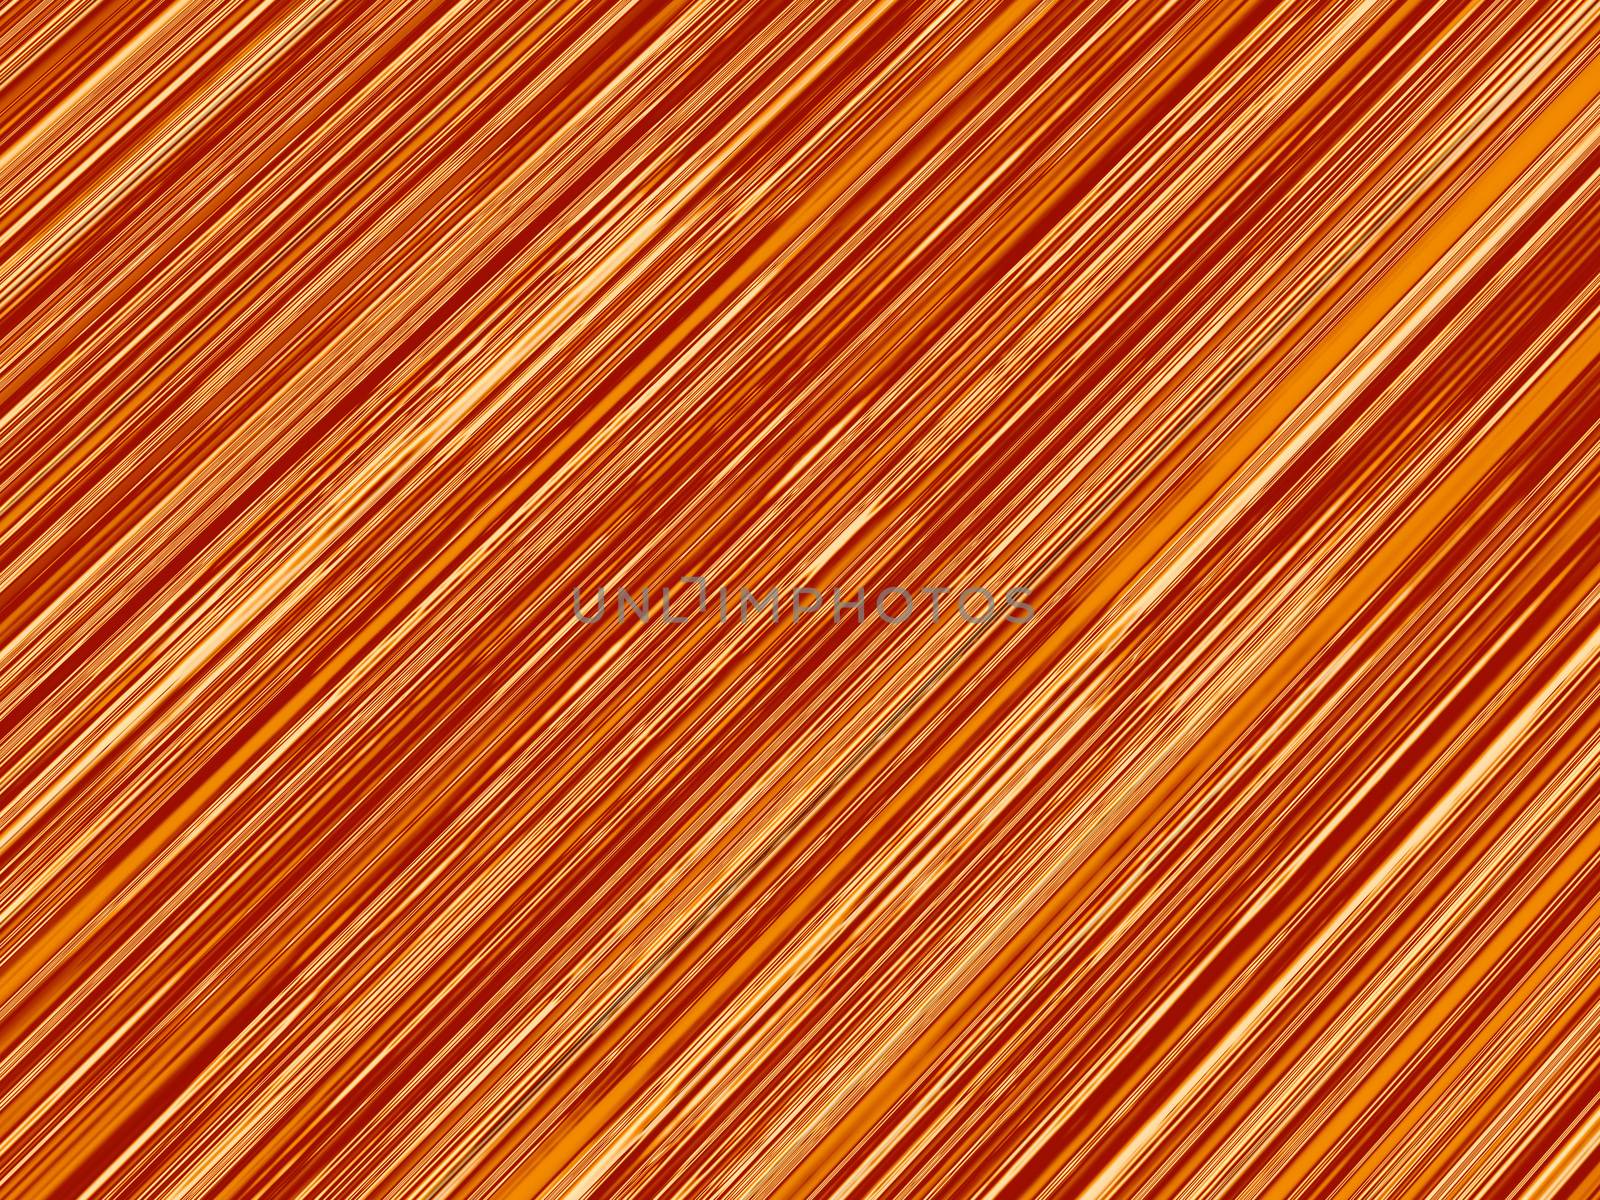 Diagonal Striped Background by illustratorCZ